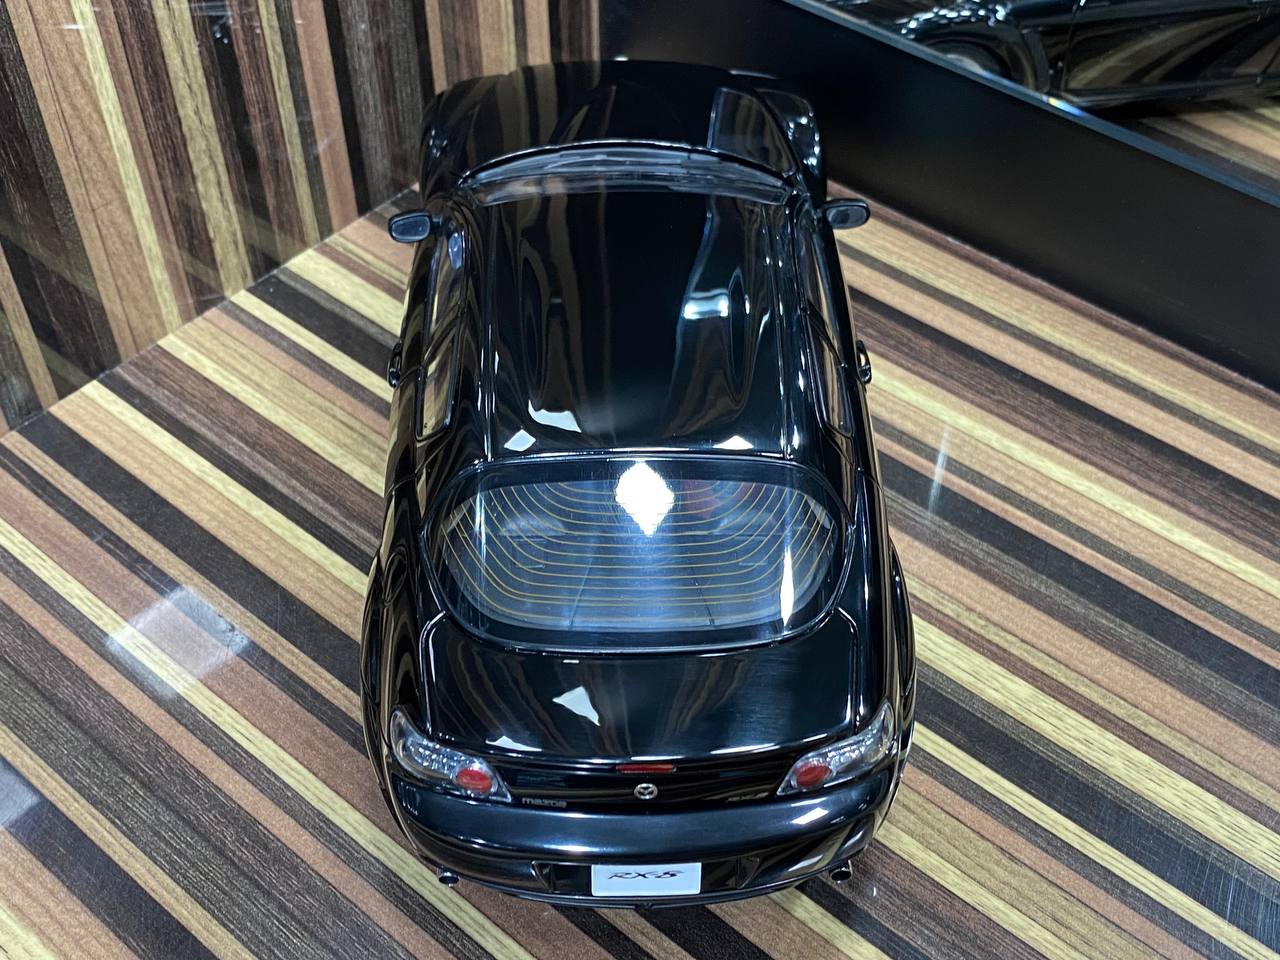 1/18 Diecast Mazda RX-8 Black AutoArt Scale Model Car